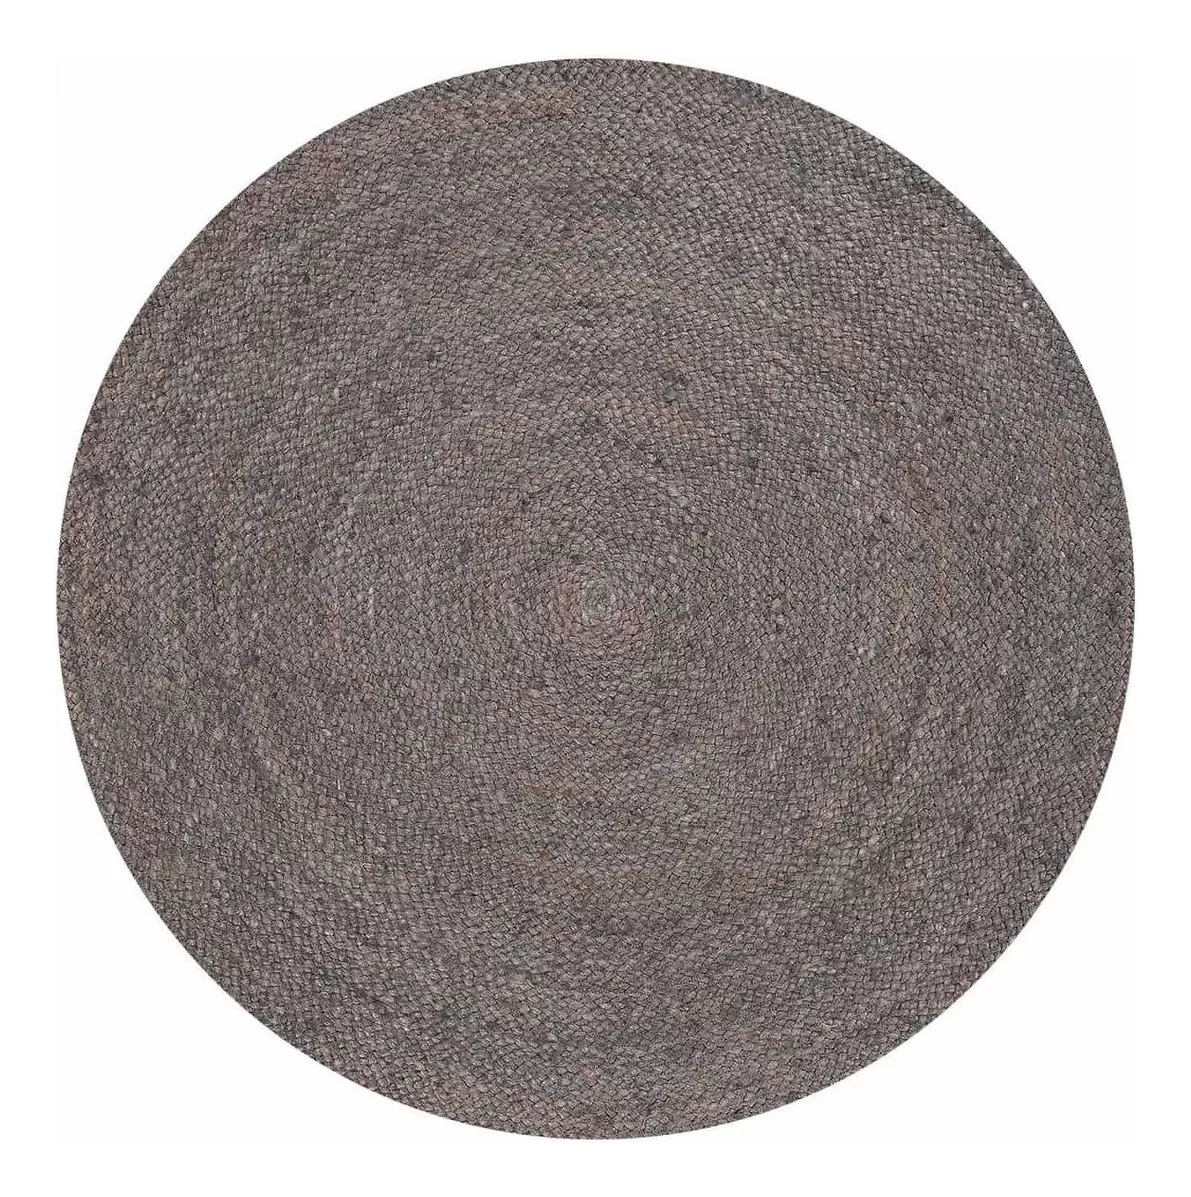 Primera imagen para búsqueda de alfombra redonda